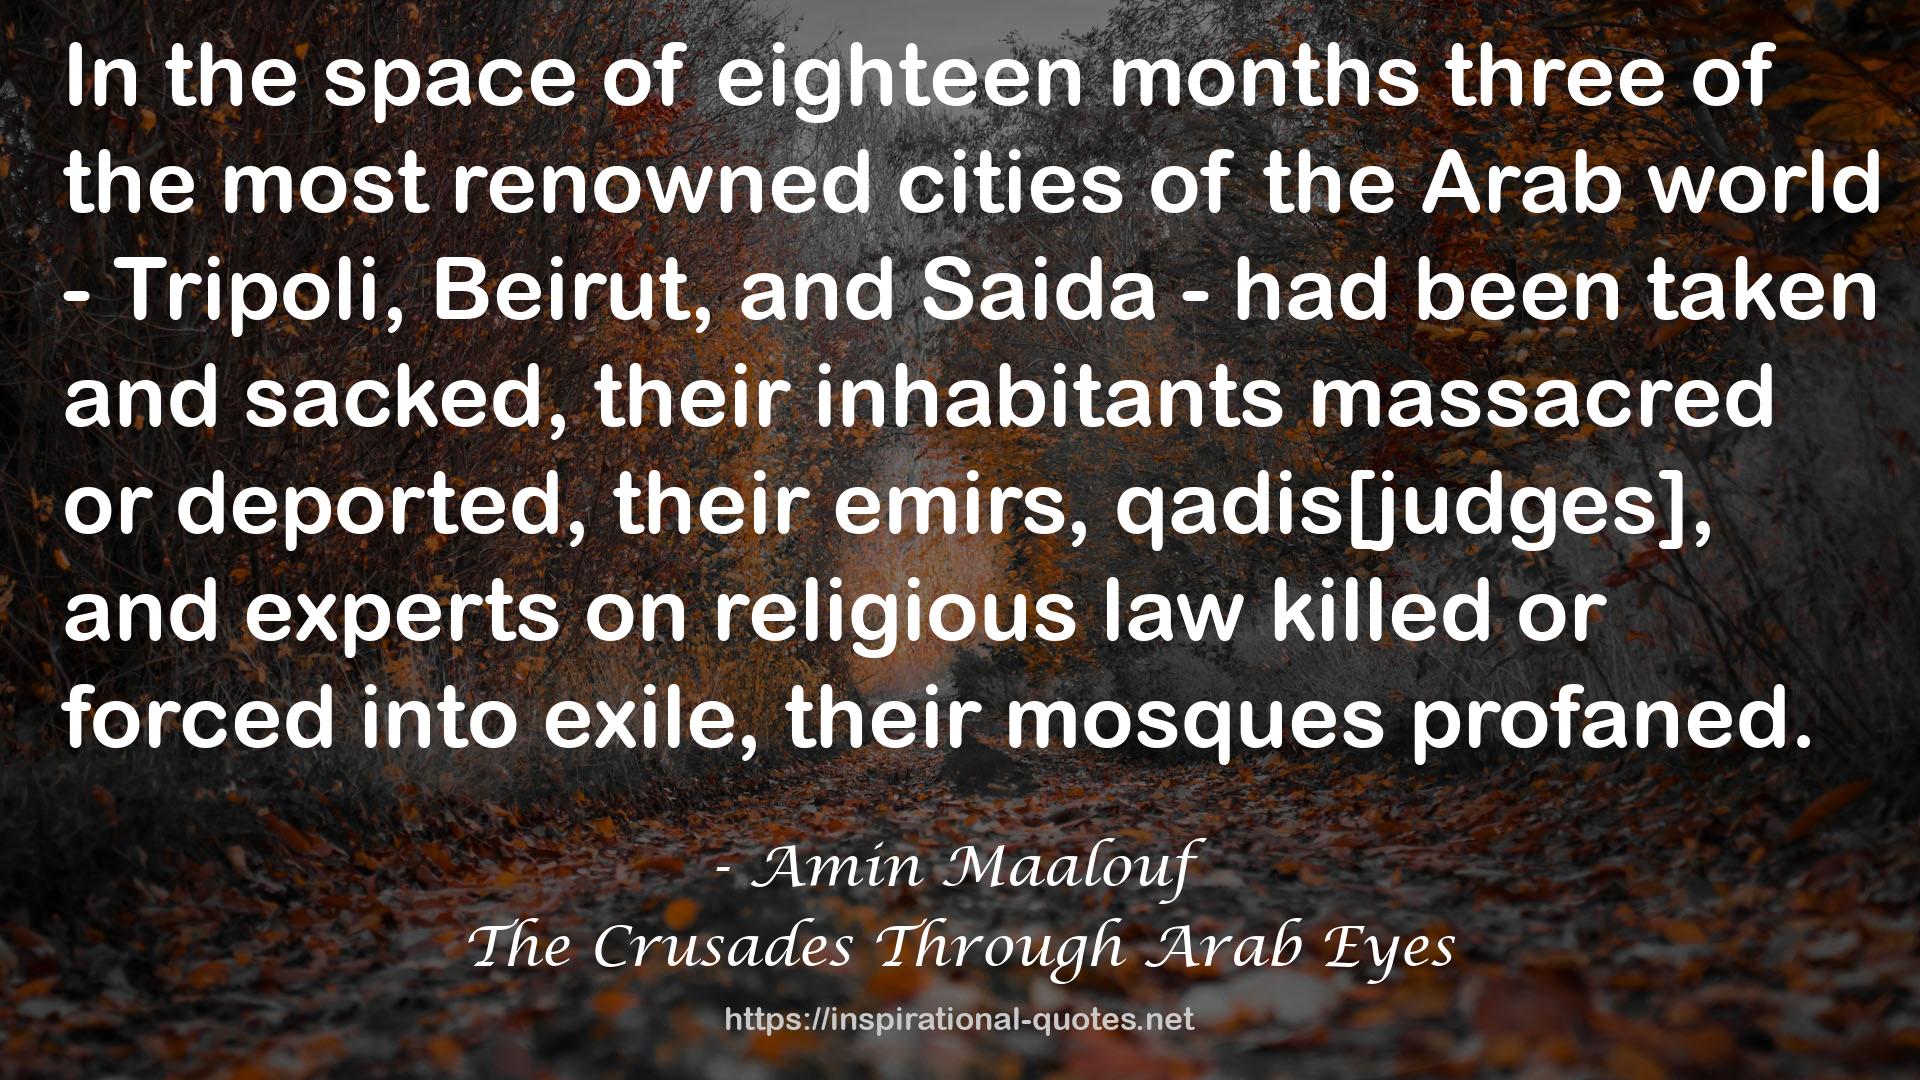 The Crusades Through Arab Eyes QUOTES